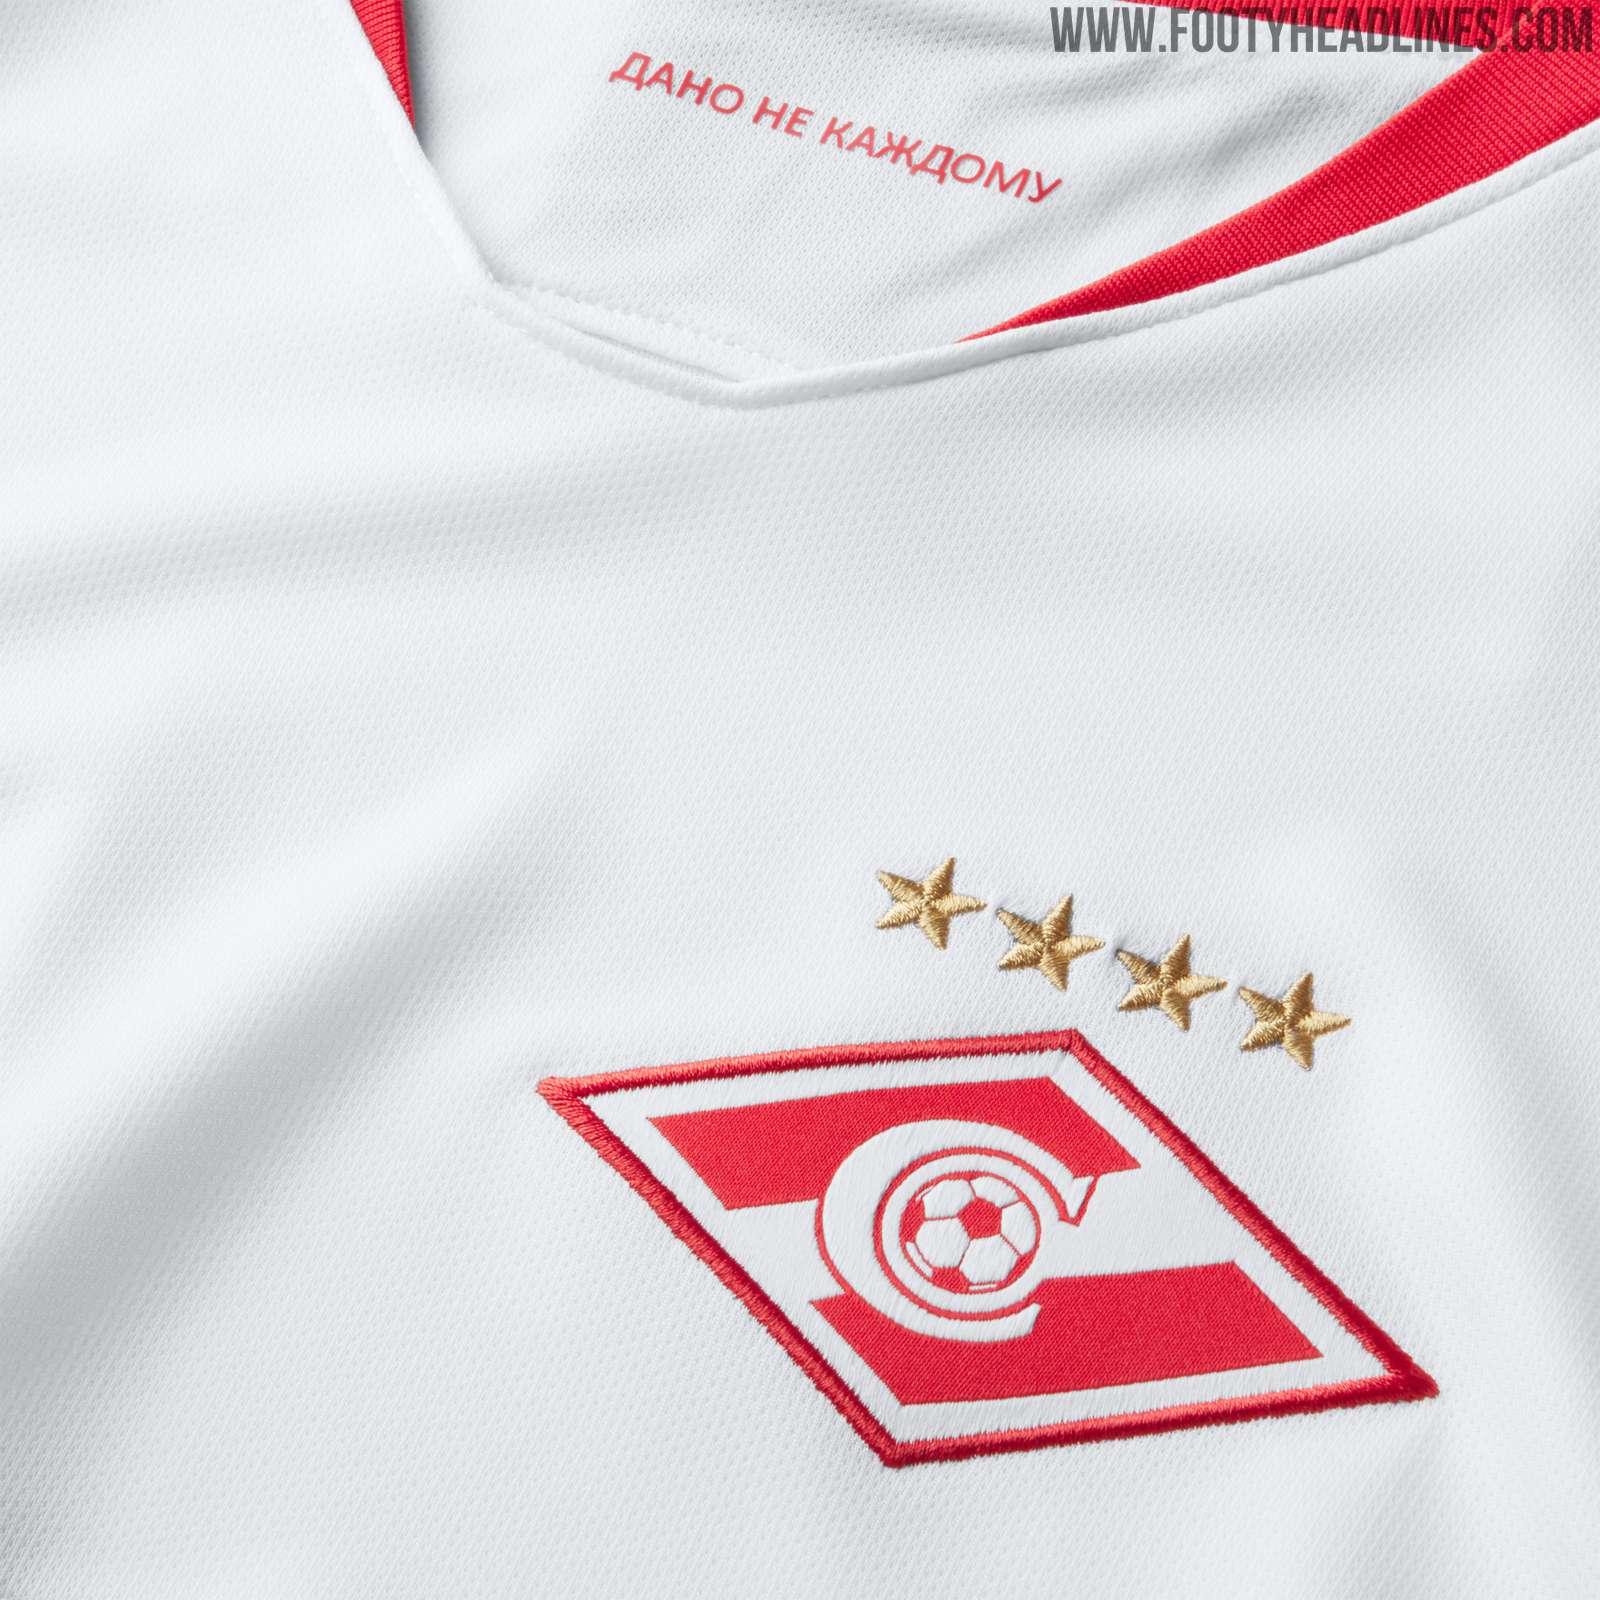 Nike Spartak Moscow 22-23 Home & Away Kits Released, Despite Nike